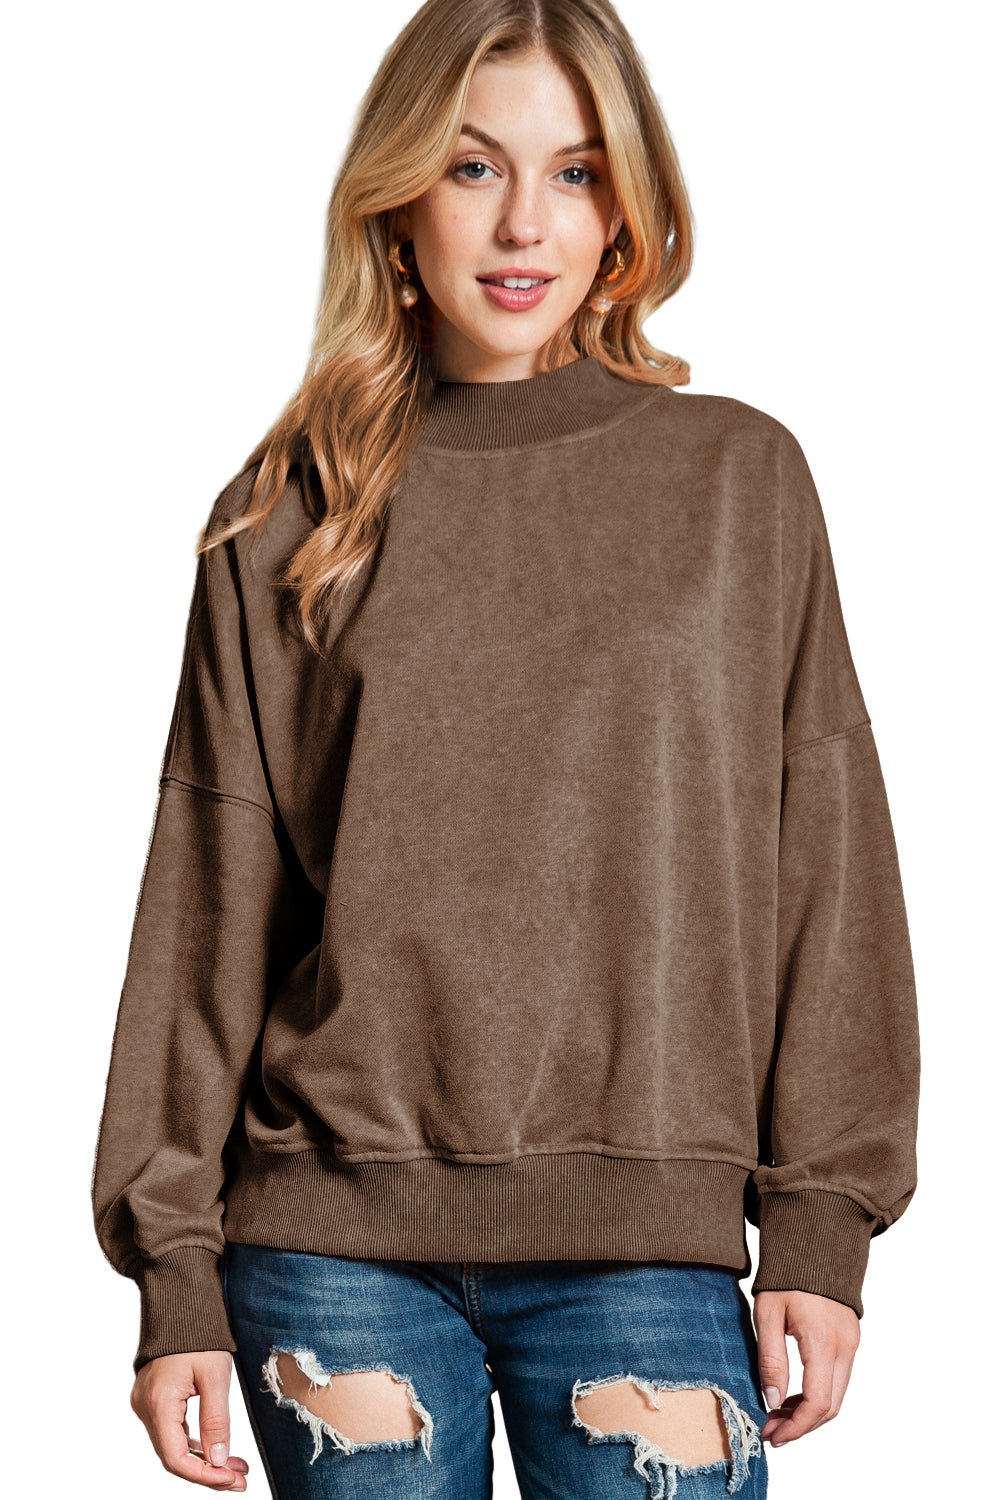 Brown Plain Drop Shoulder Crew Neck Pullover Sweatshirt - Bellisima Clothing Collective